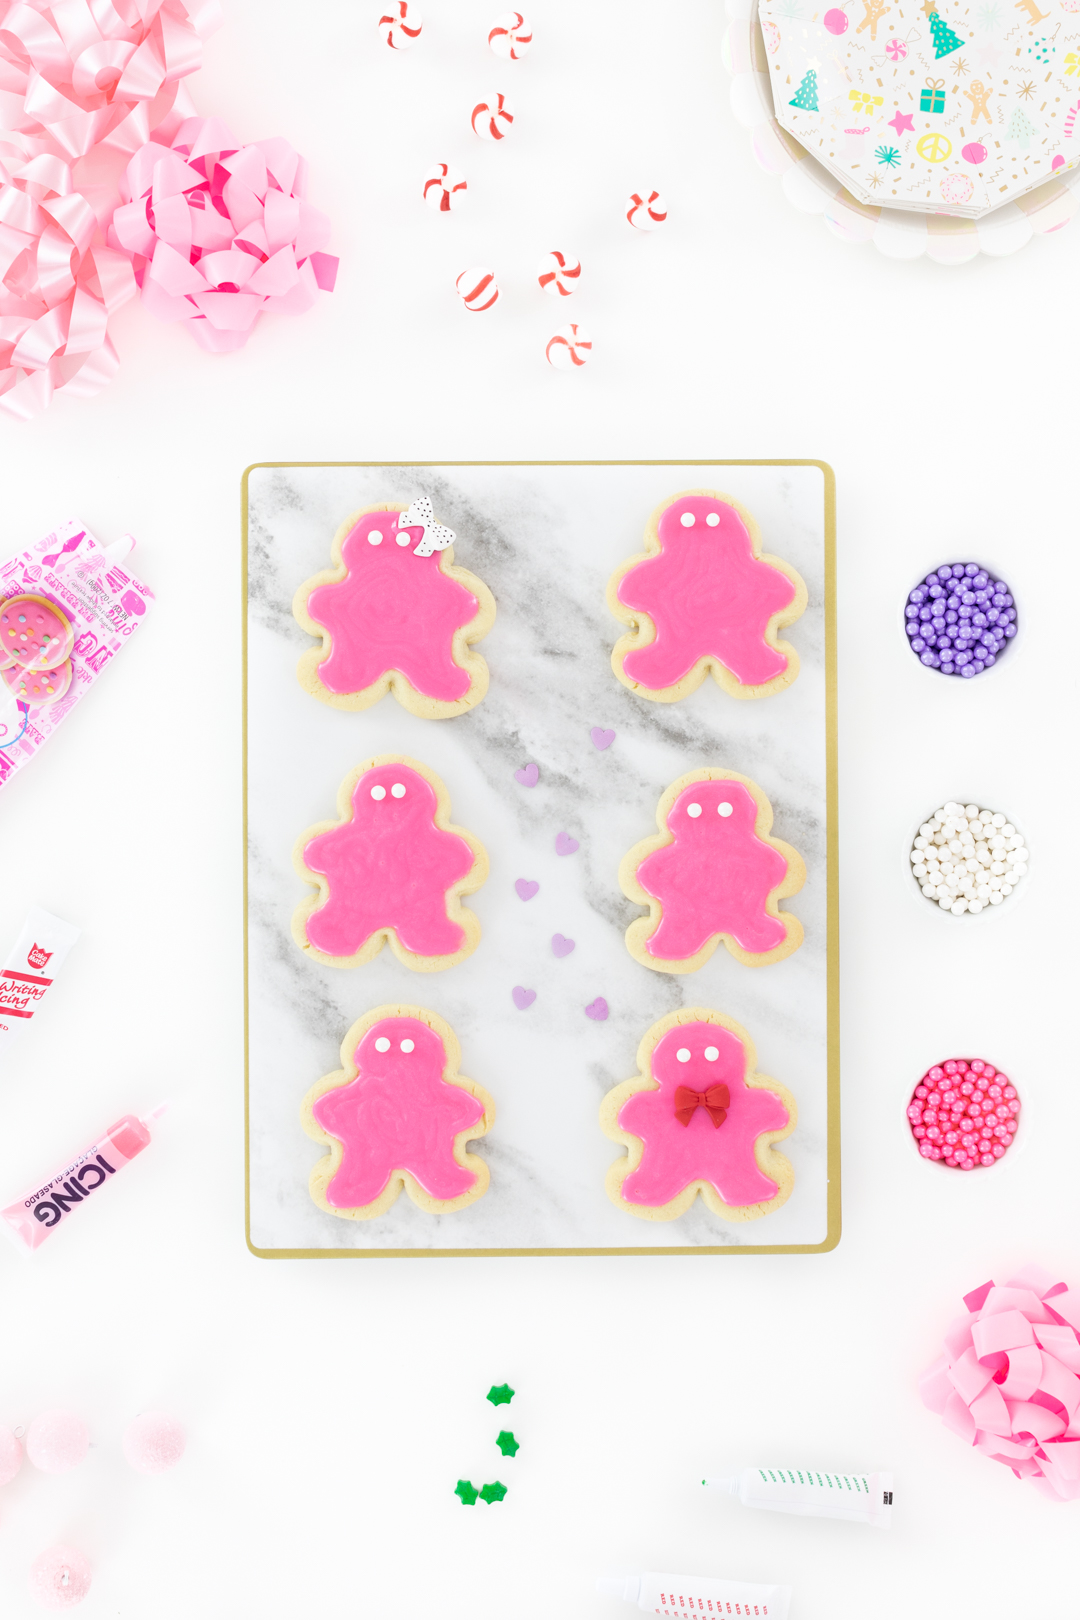 decorating pink gingerbread shaped sugar cookies